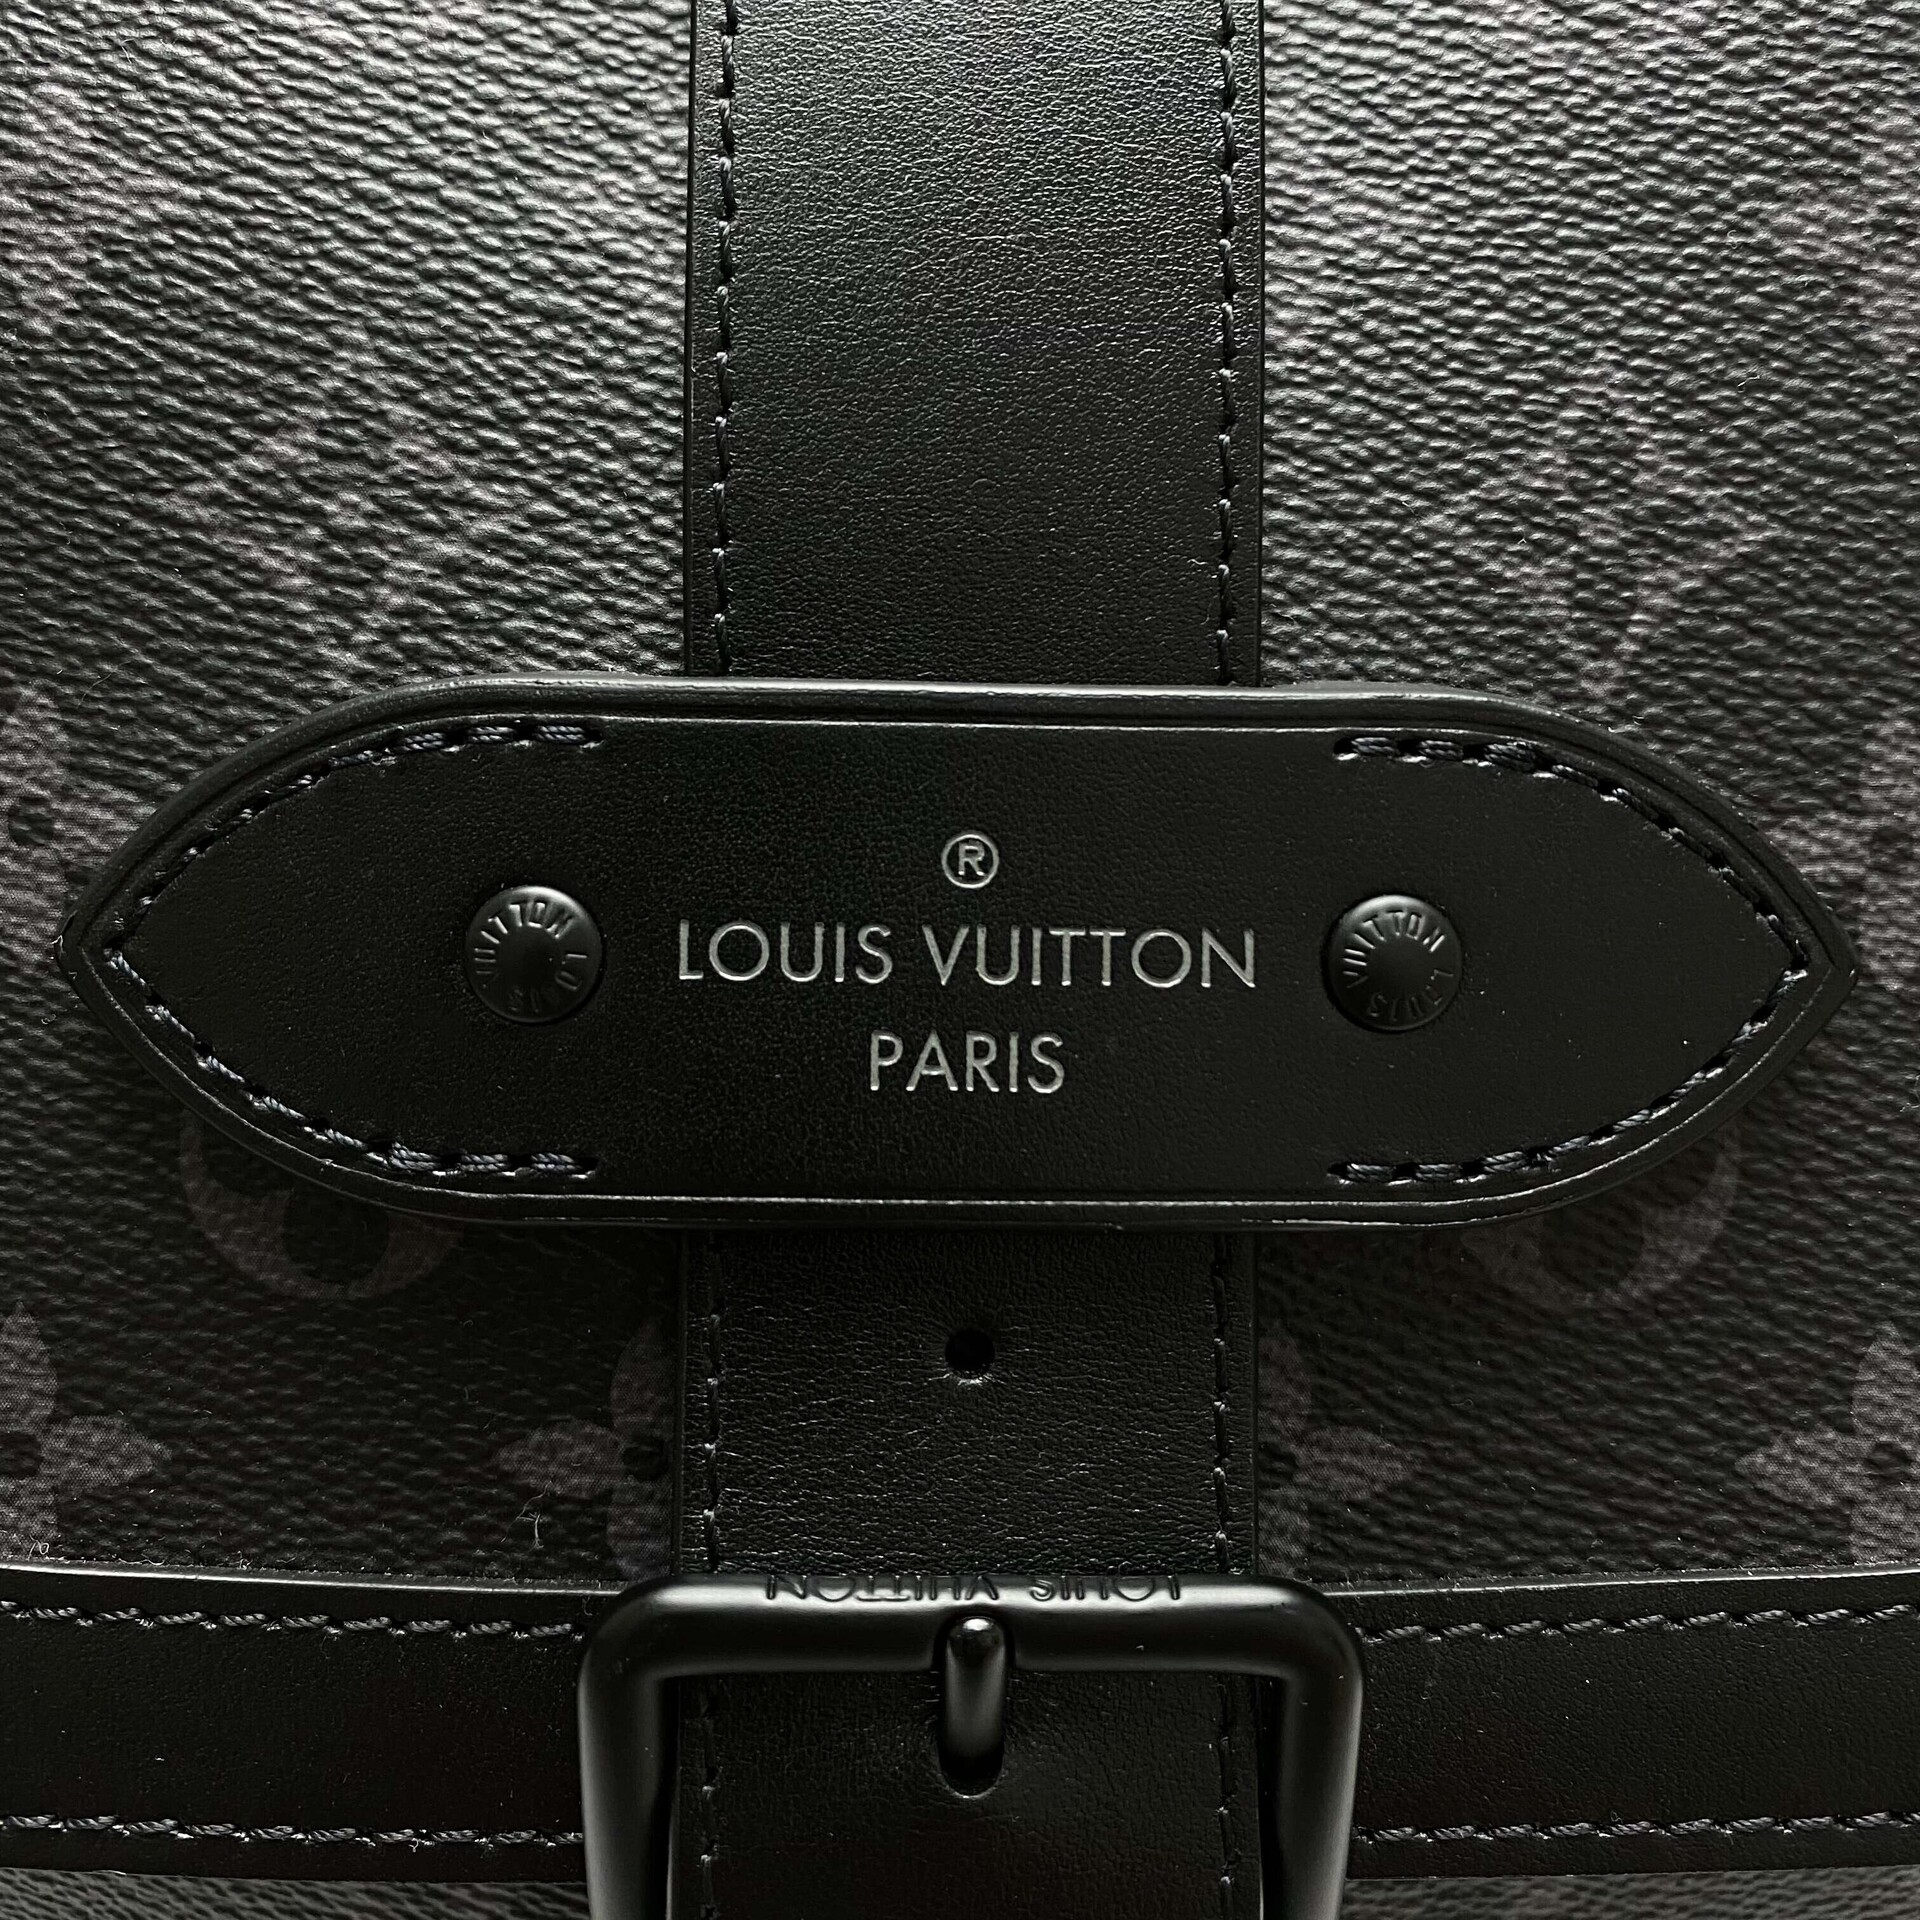 Mochila Louis Vuitton Saumur